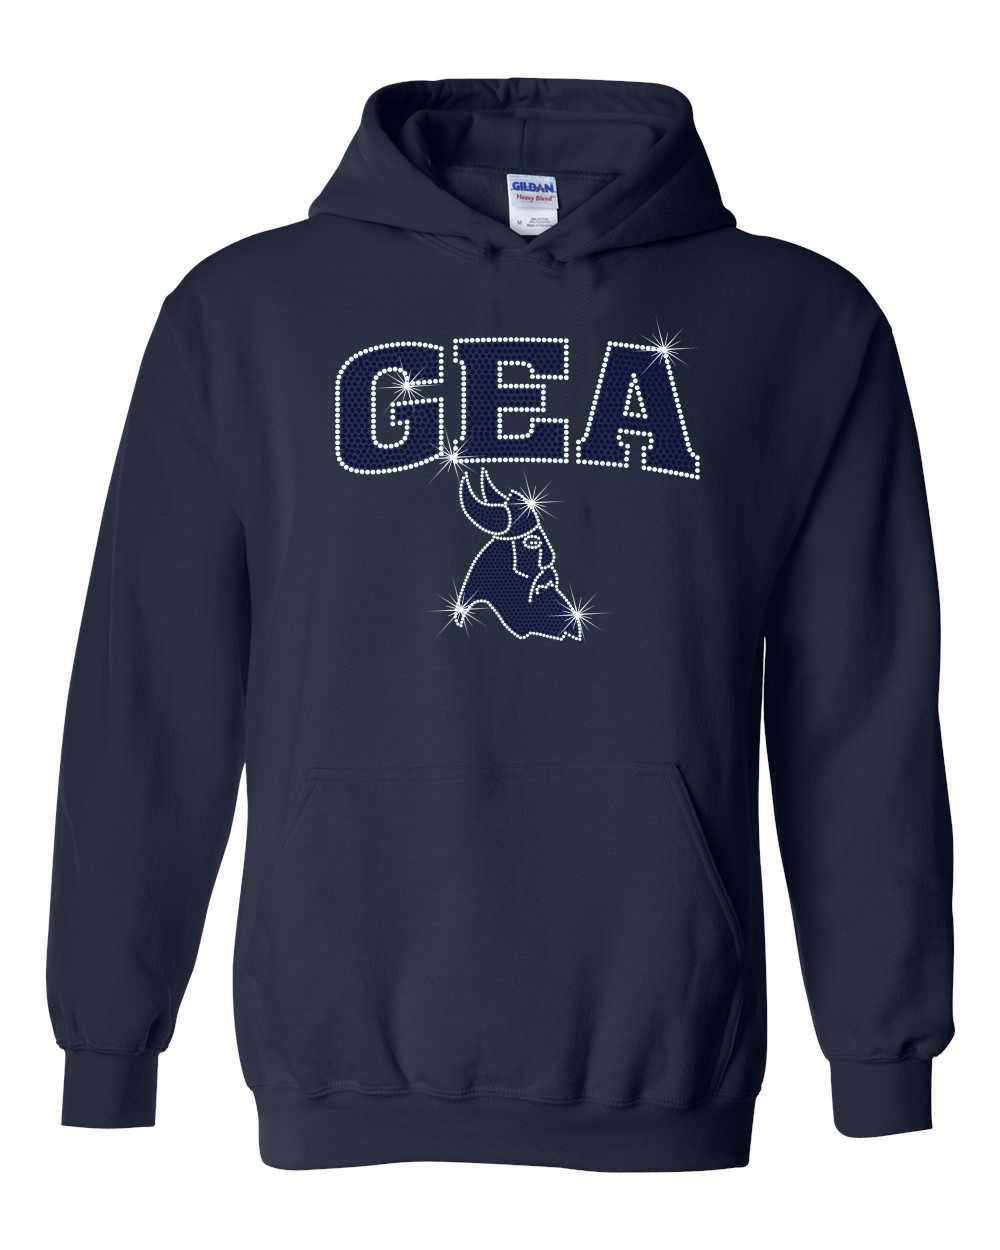 GEA Unisex Hooded Sweatshirts With Sparkle Imprints